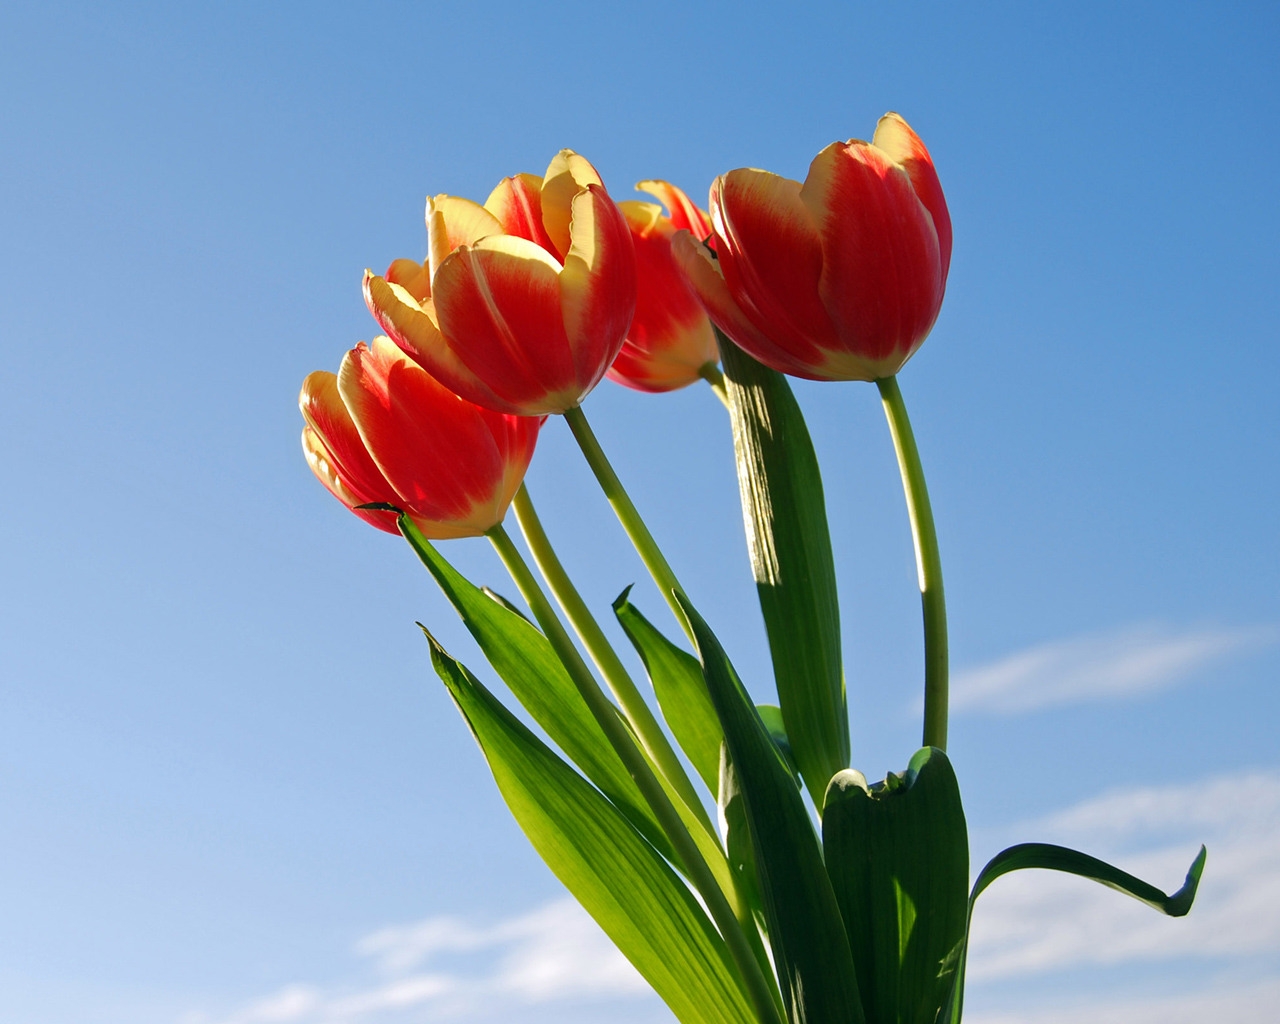 Sun Tulips for 1280 x 1024 resolution